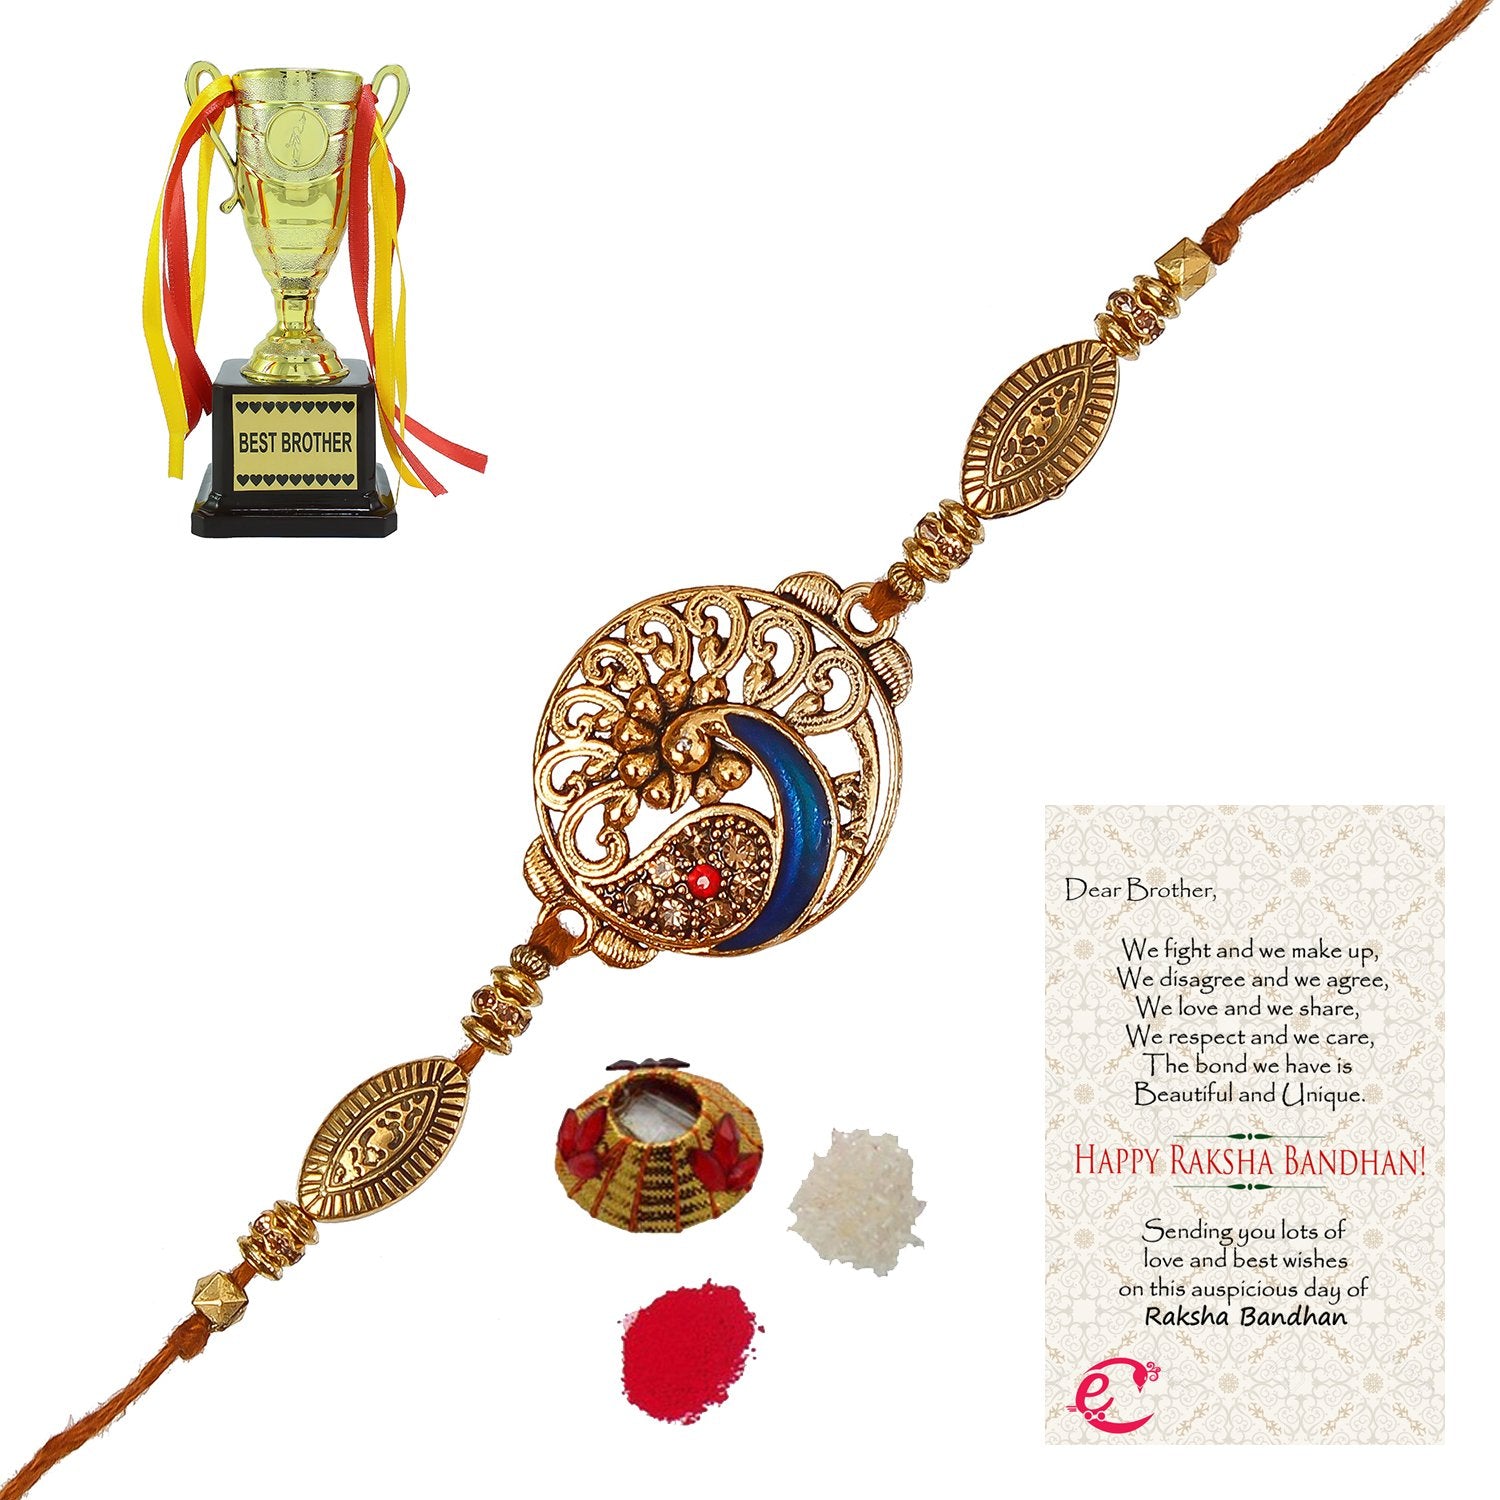 Designer Peacock Rakhi with Best Brother Trophy and Roli Tikka Matki, Best Wishes Greeting Card